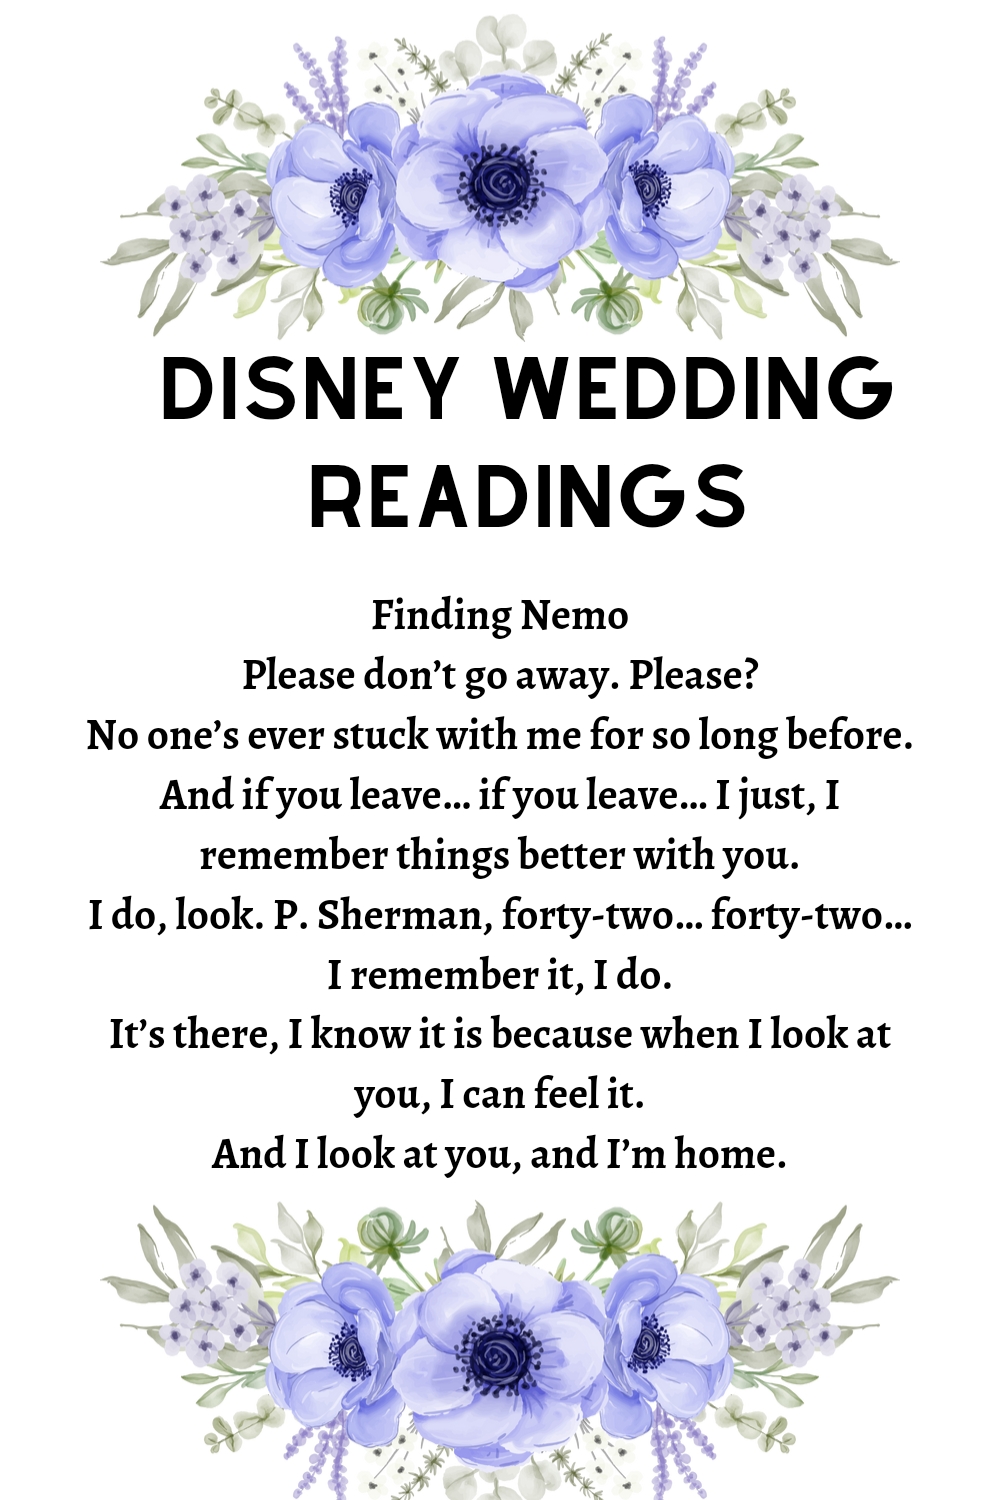 Disney wedding readings